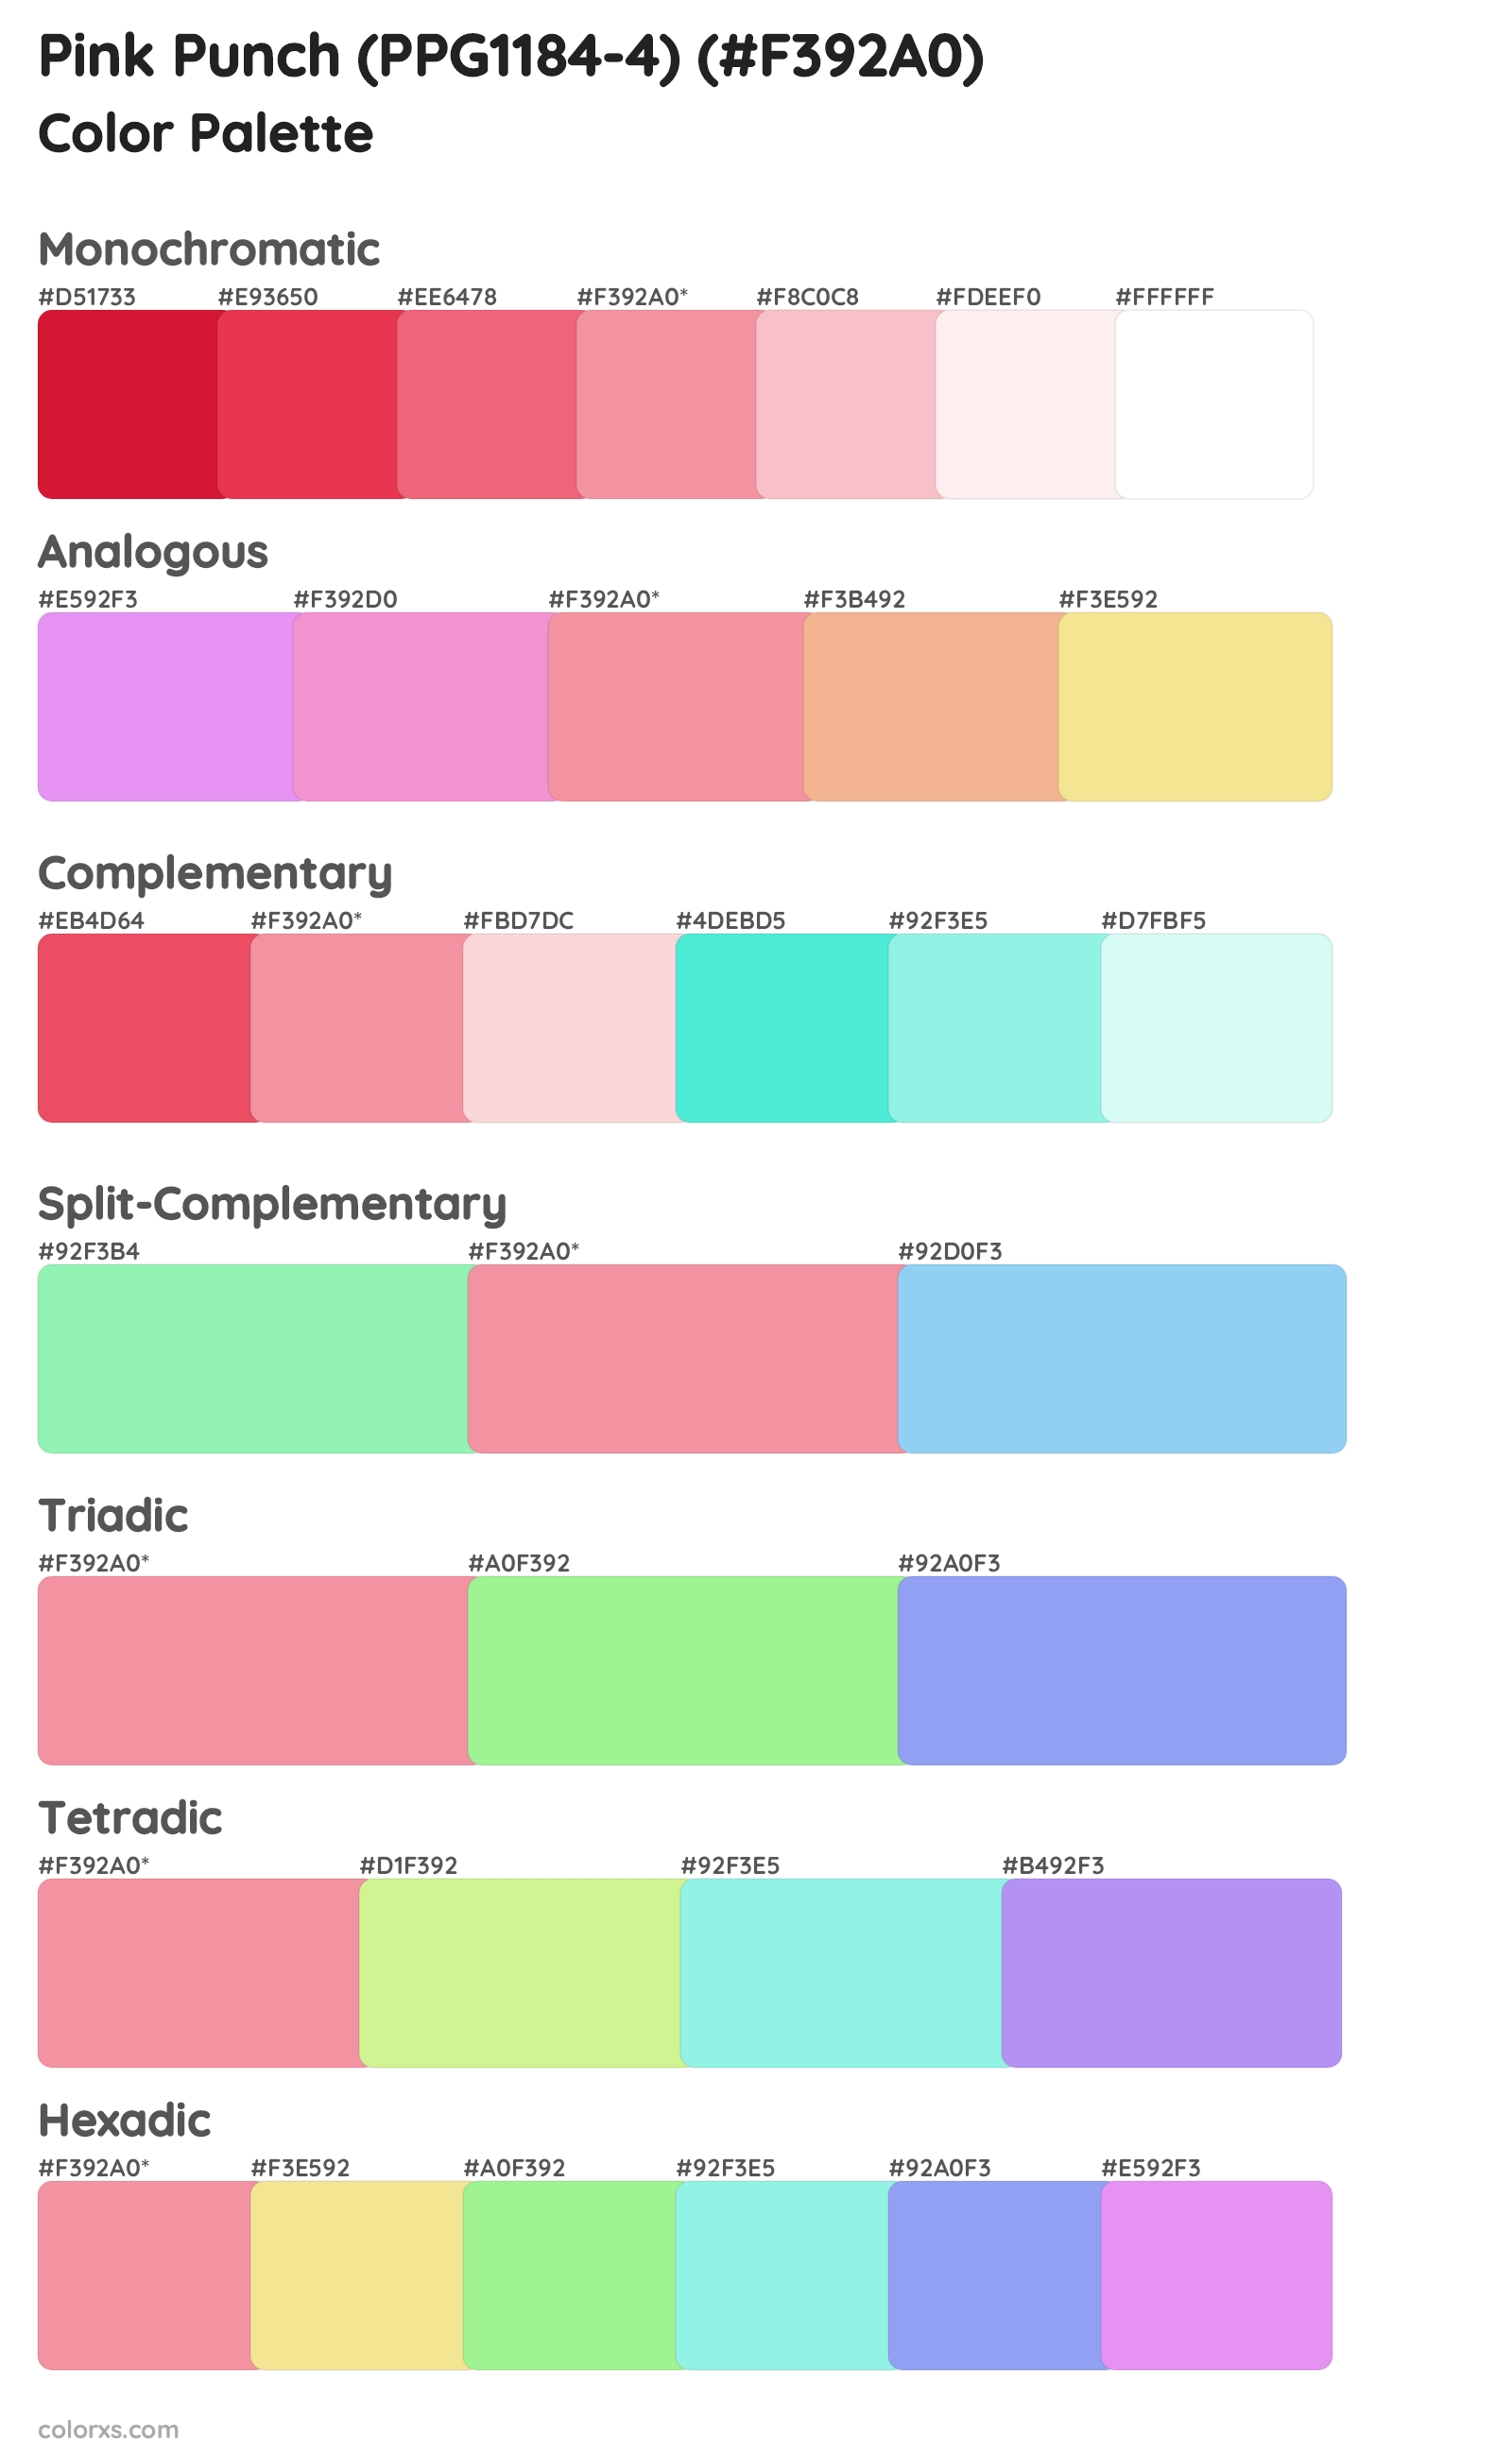 Pink Punch (PPG1184-4) Color Scheme Palettes